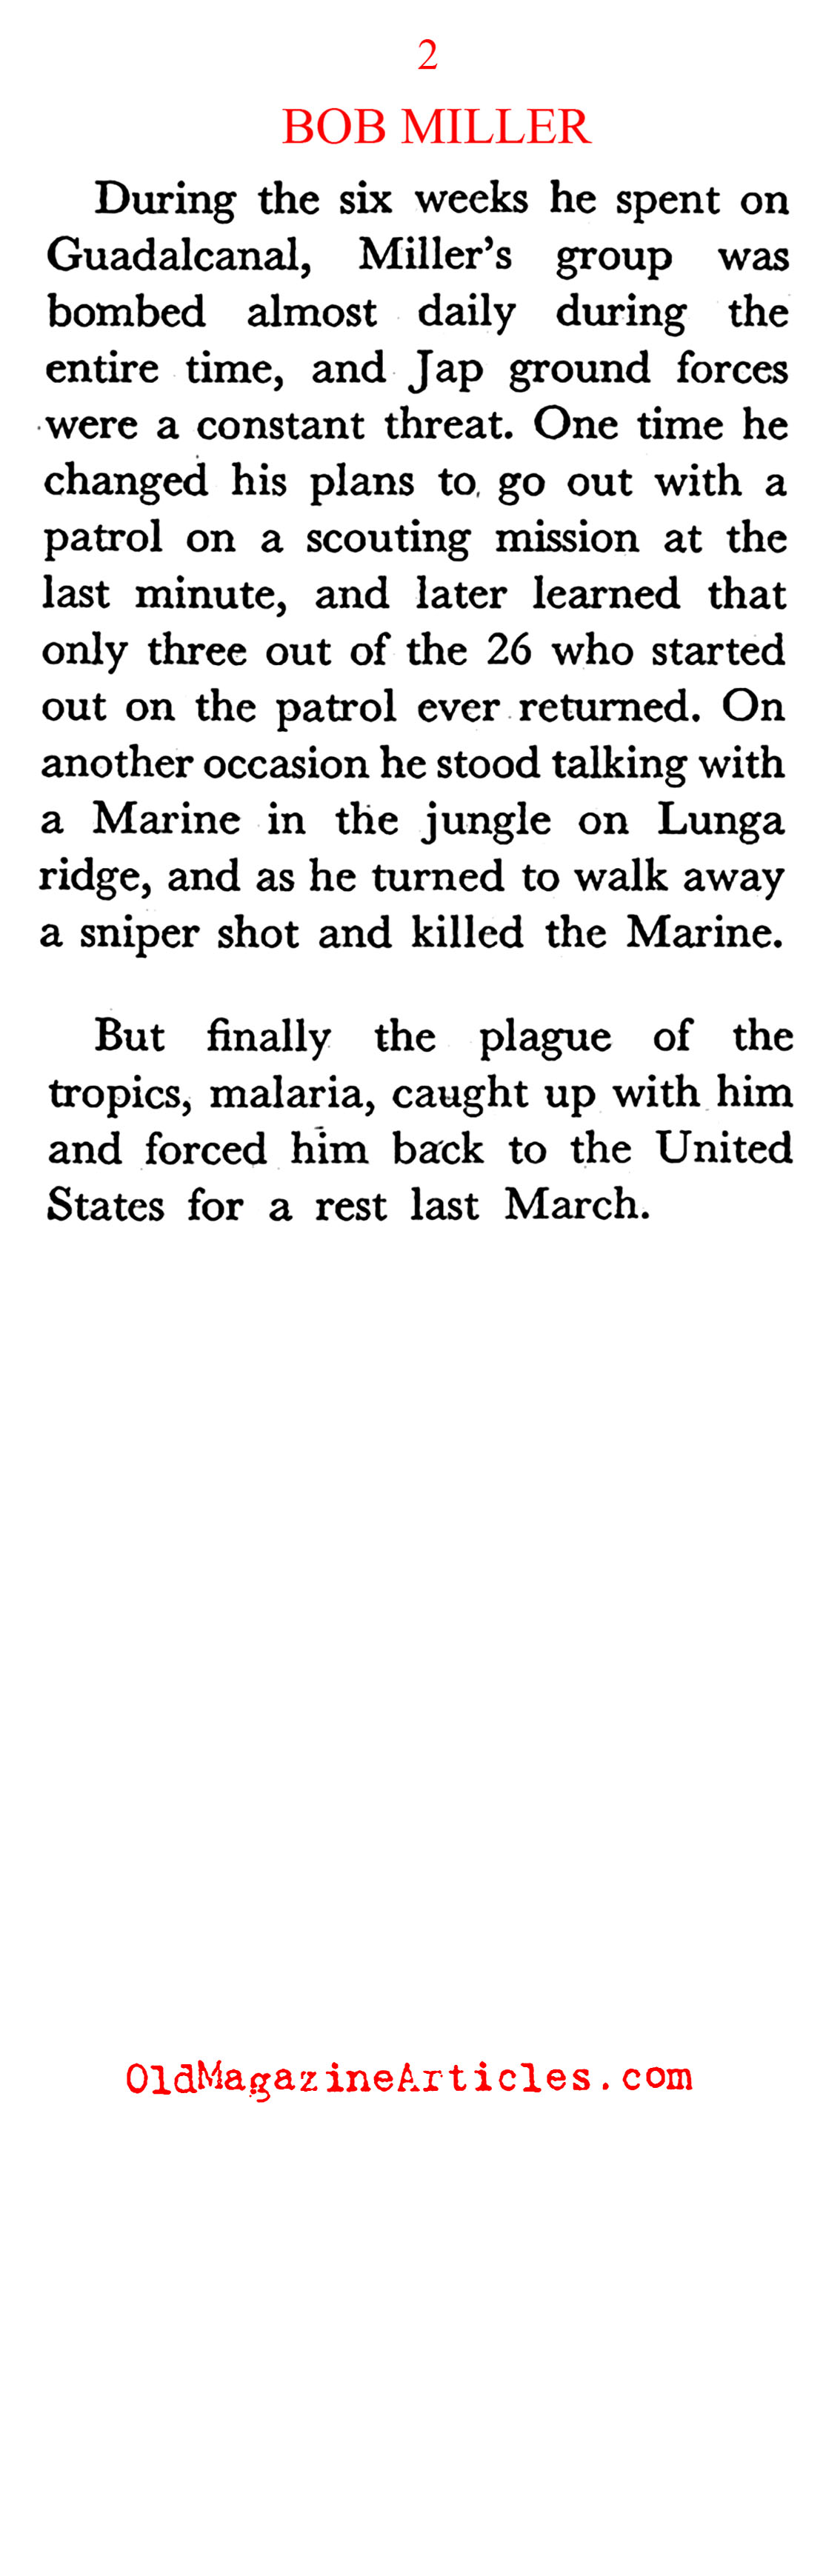 Bob Miller of the United Press (Coronet Magazine, 1944)